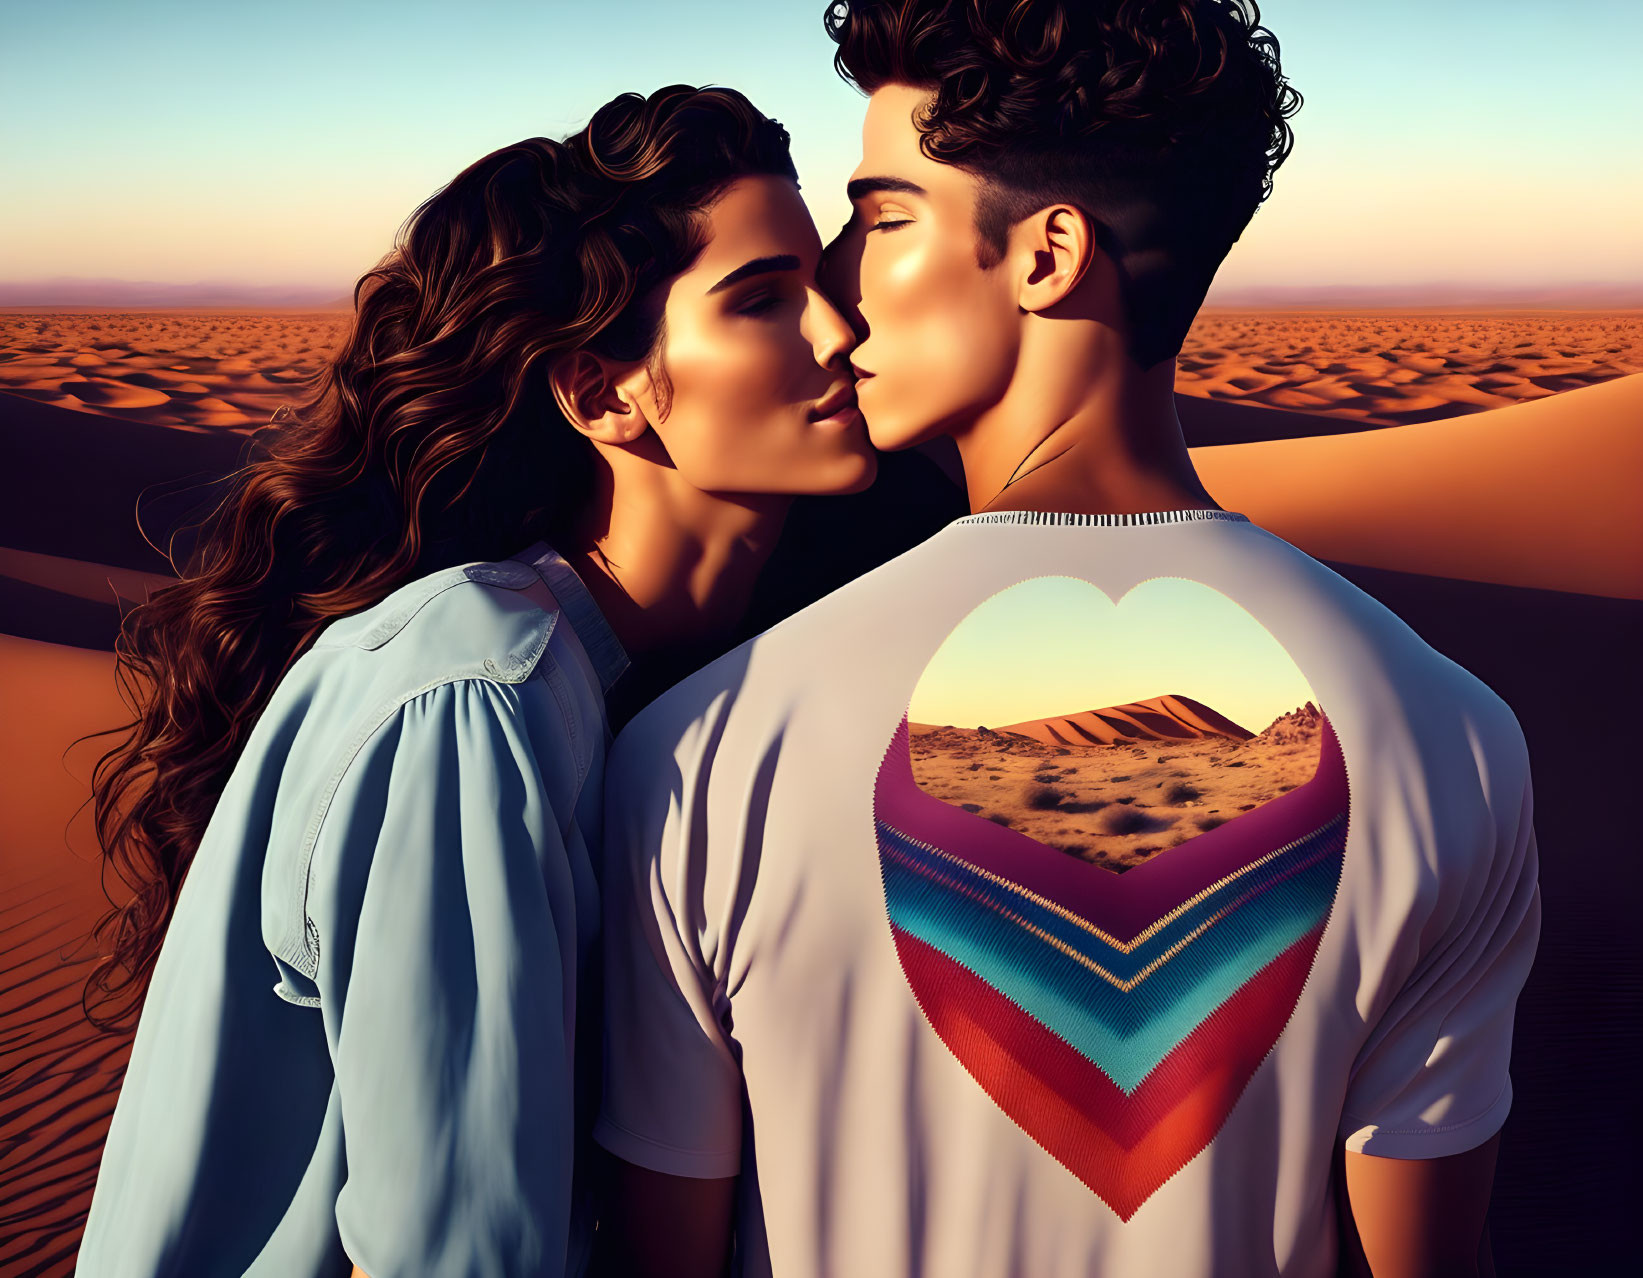 Romantic couple digital illustration with mirrored sunglasses reflection